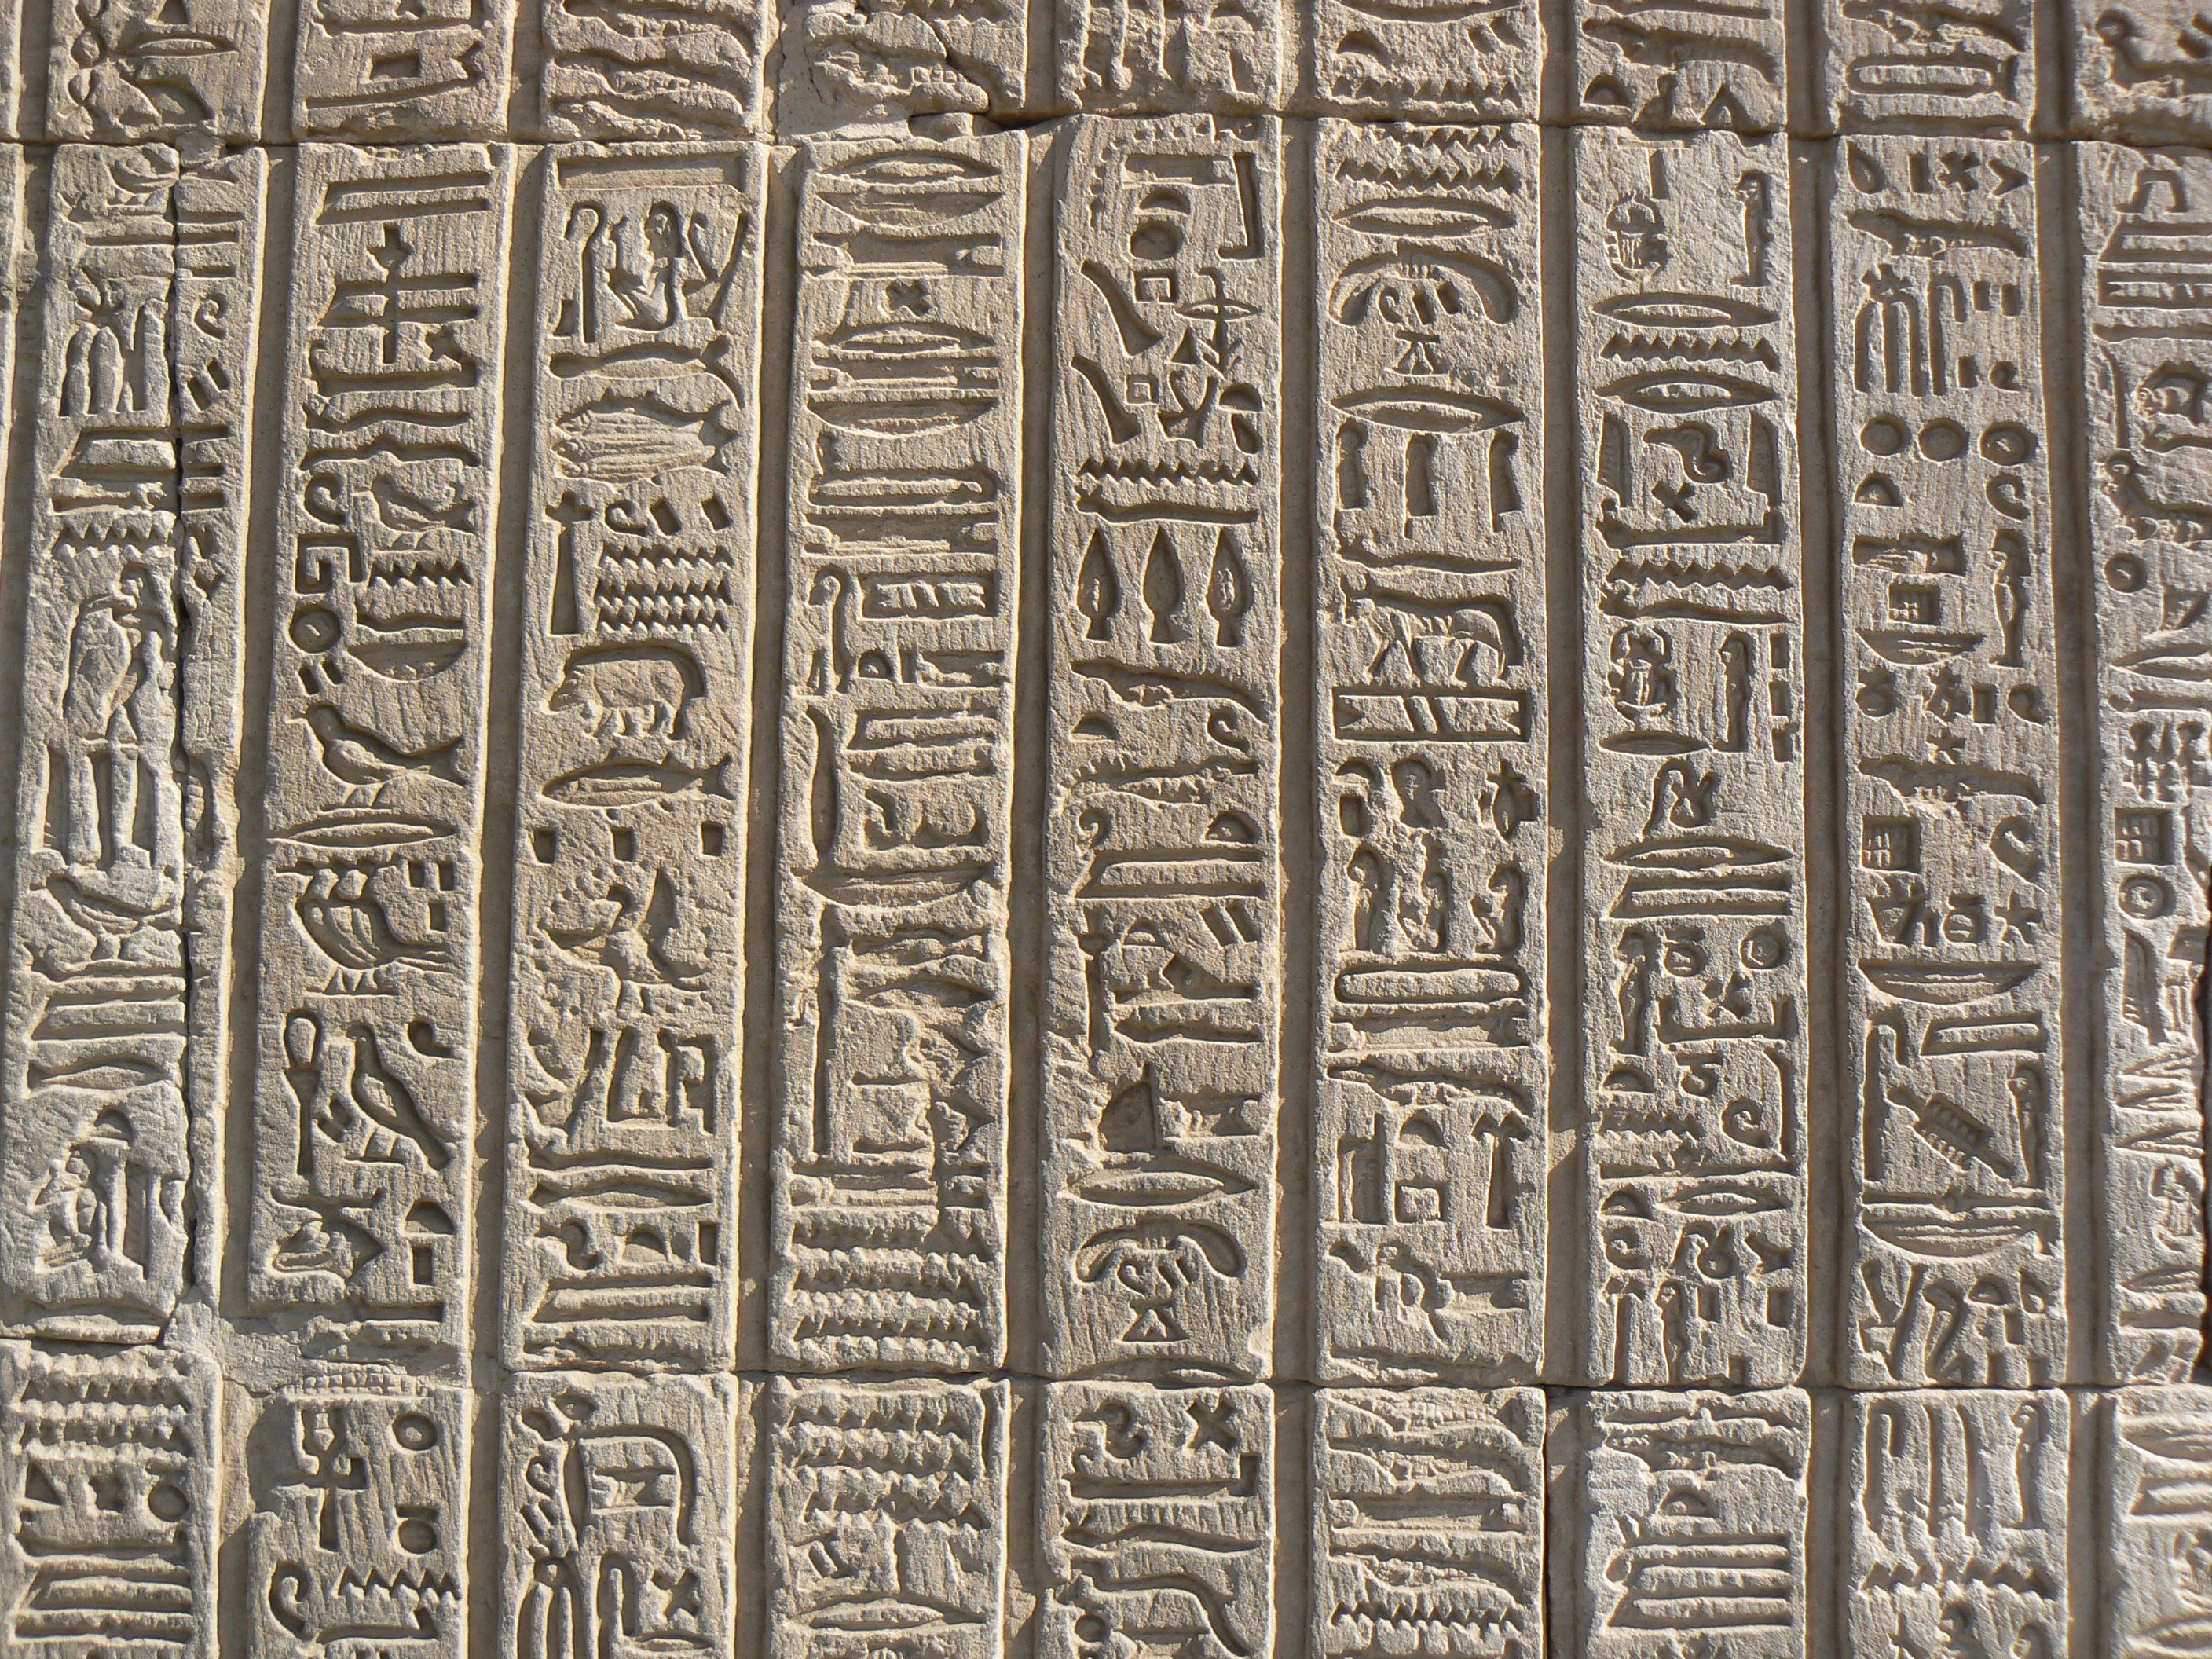 Egyptian Hd Wallpapers